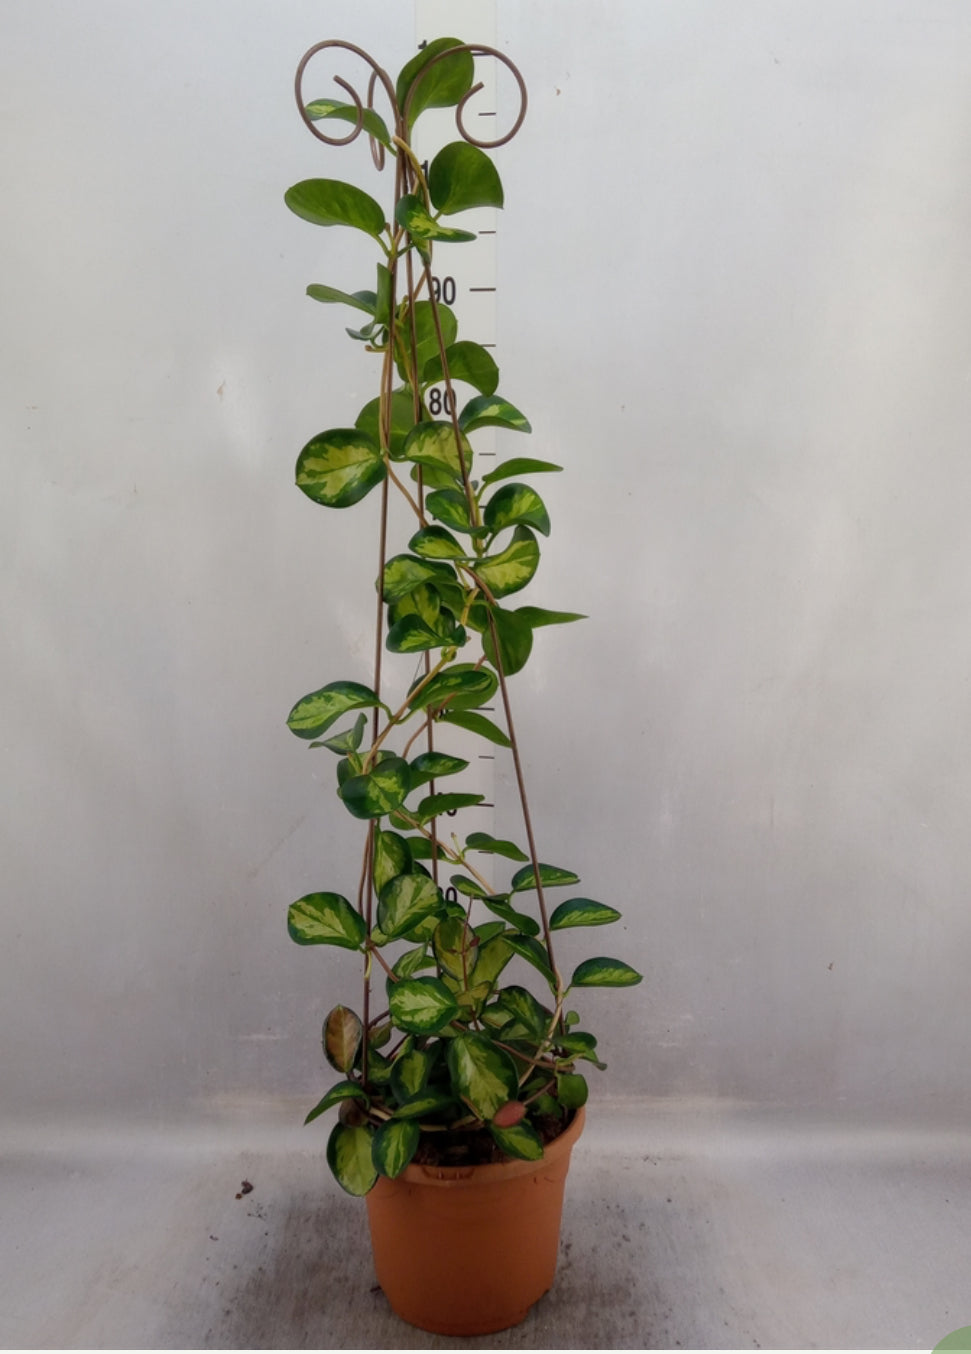 Hoya australis tenuipes 'Lisa' - a Cheeky Plant